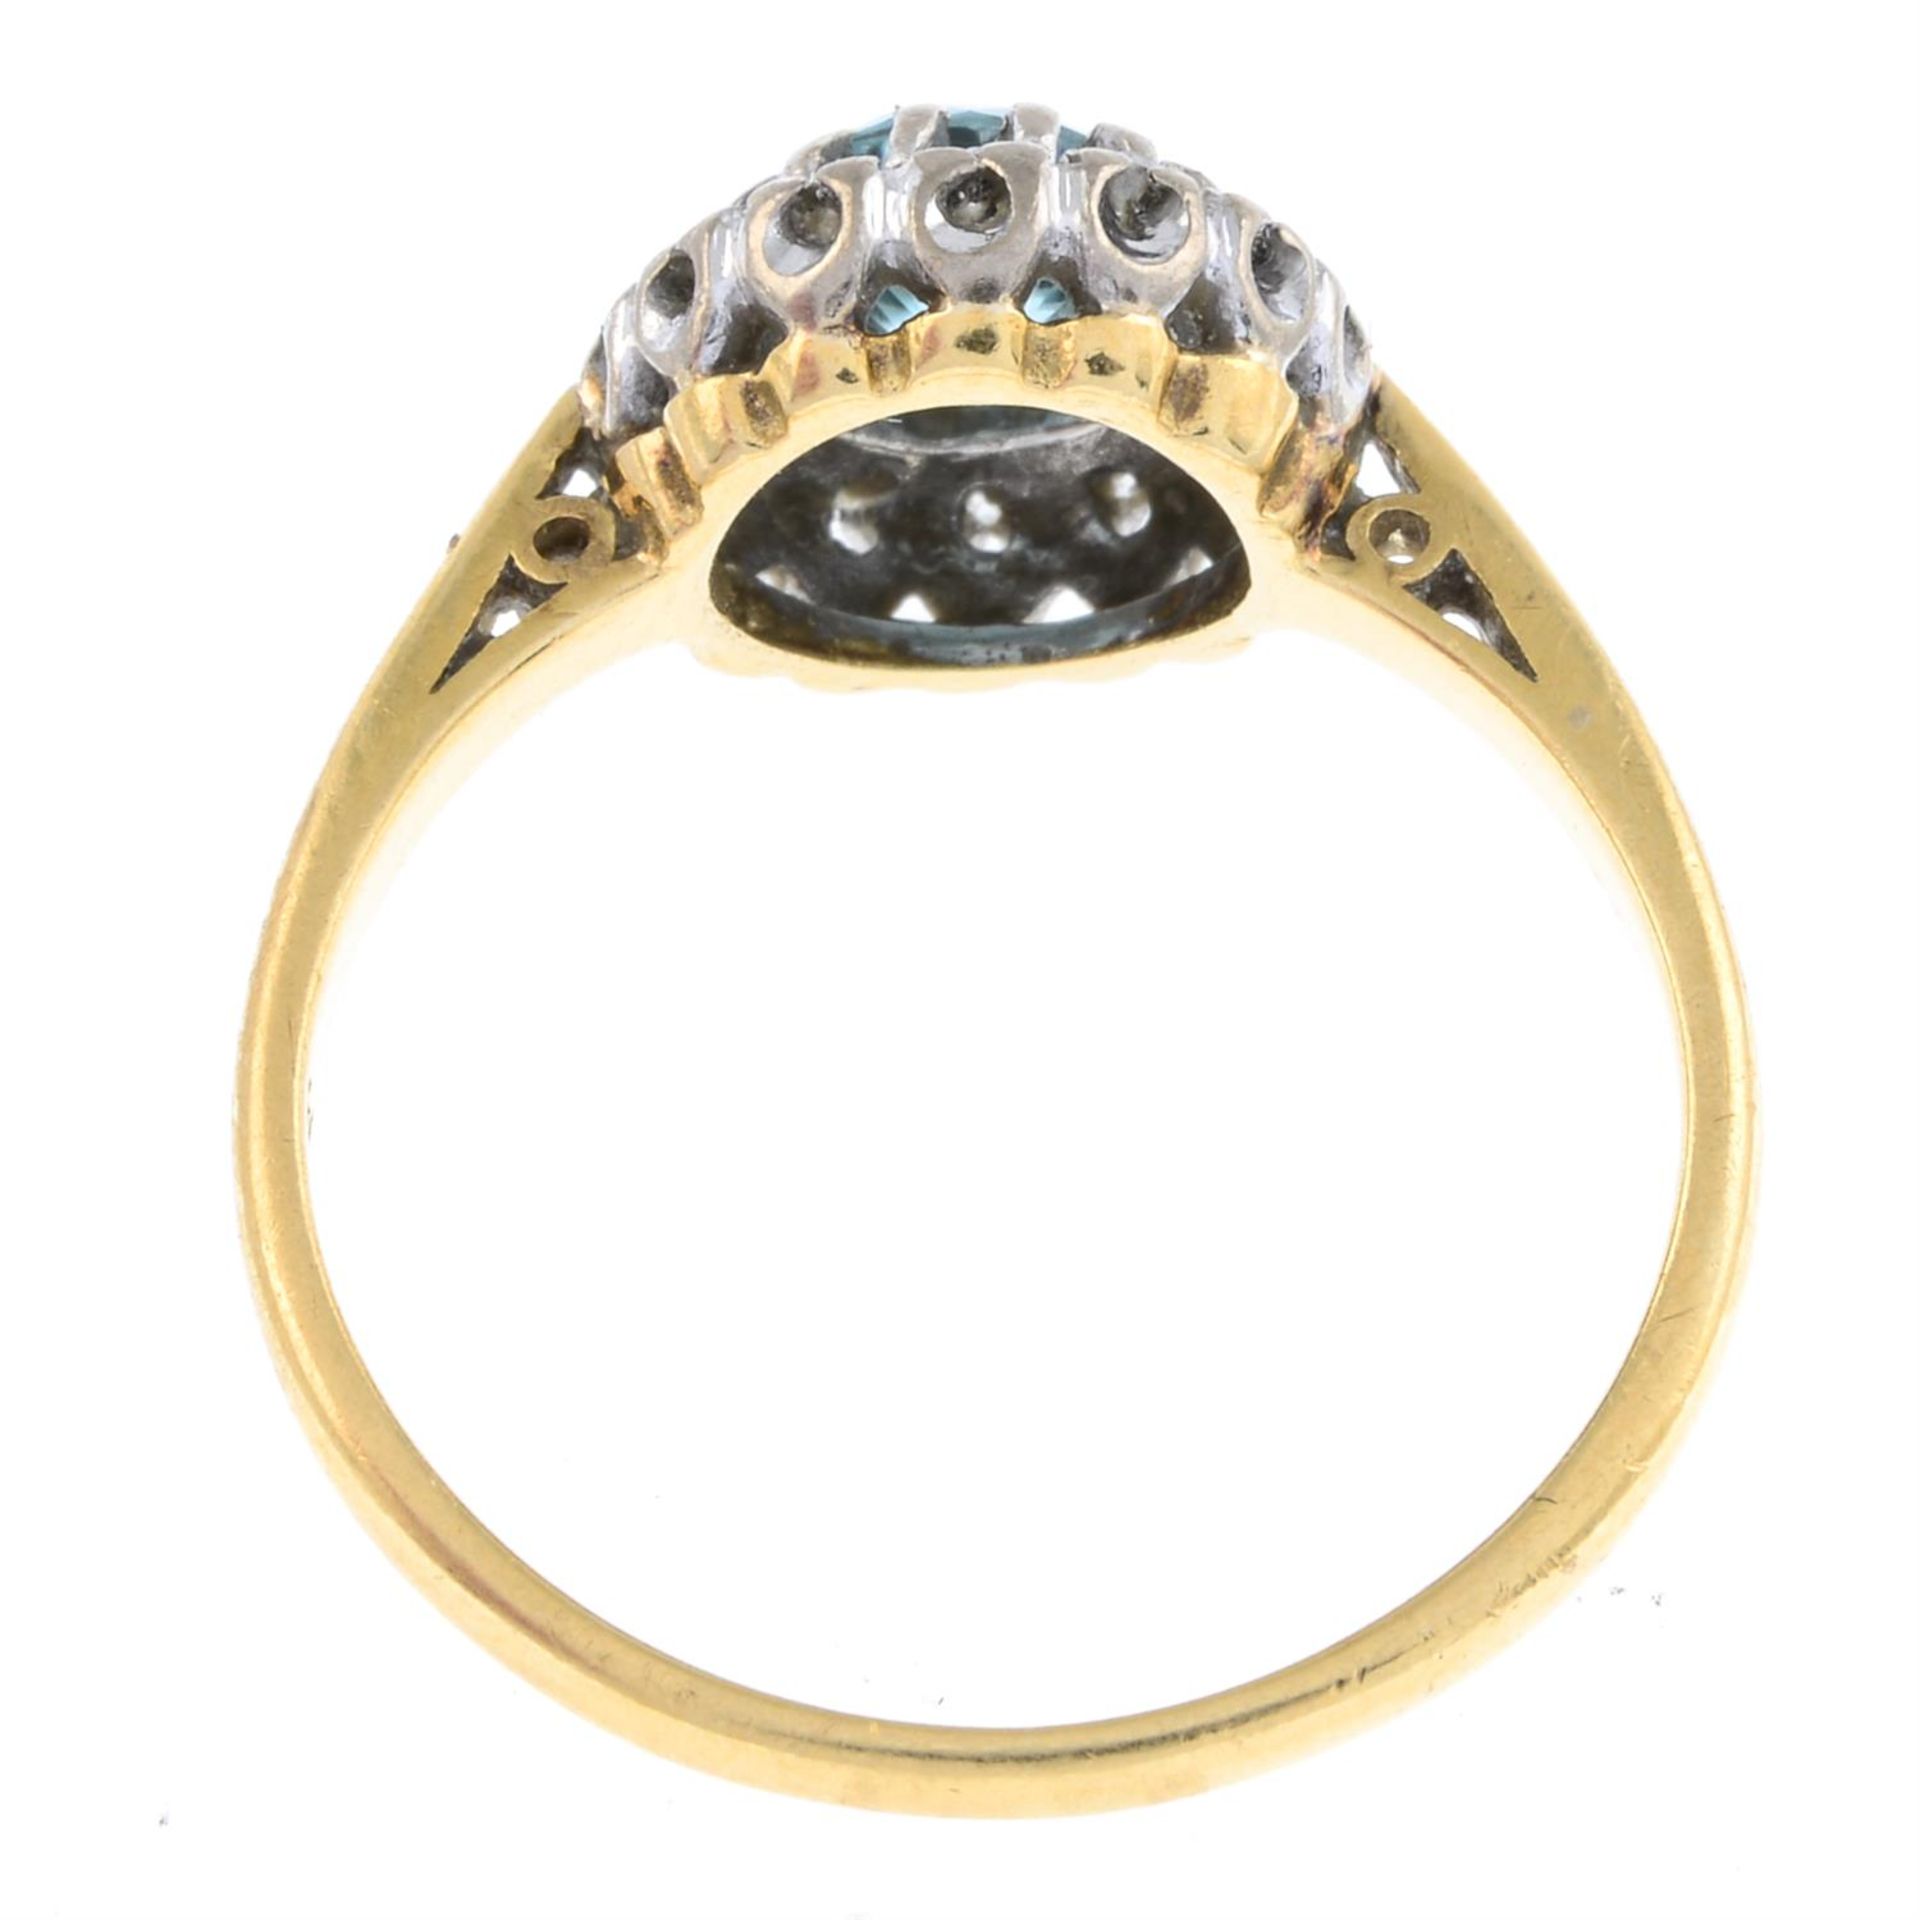 Mid 20th century zircon & diamond ring - Image 2 of 2